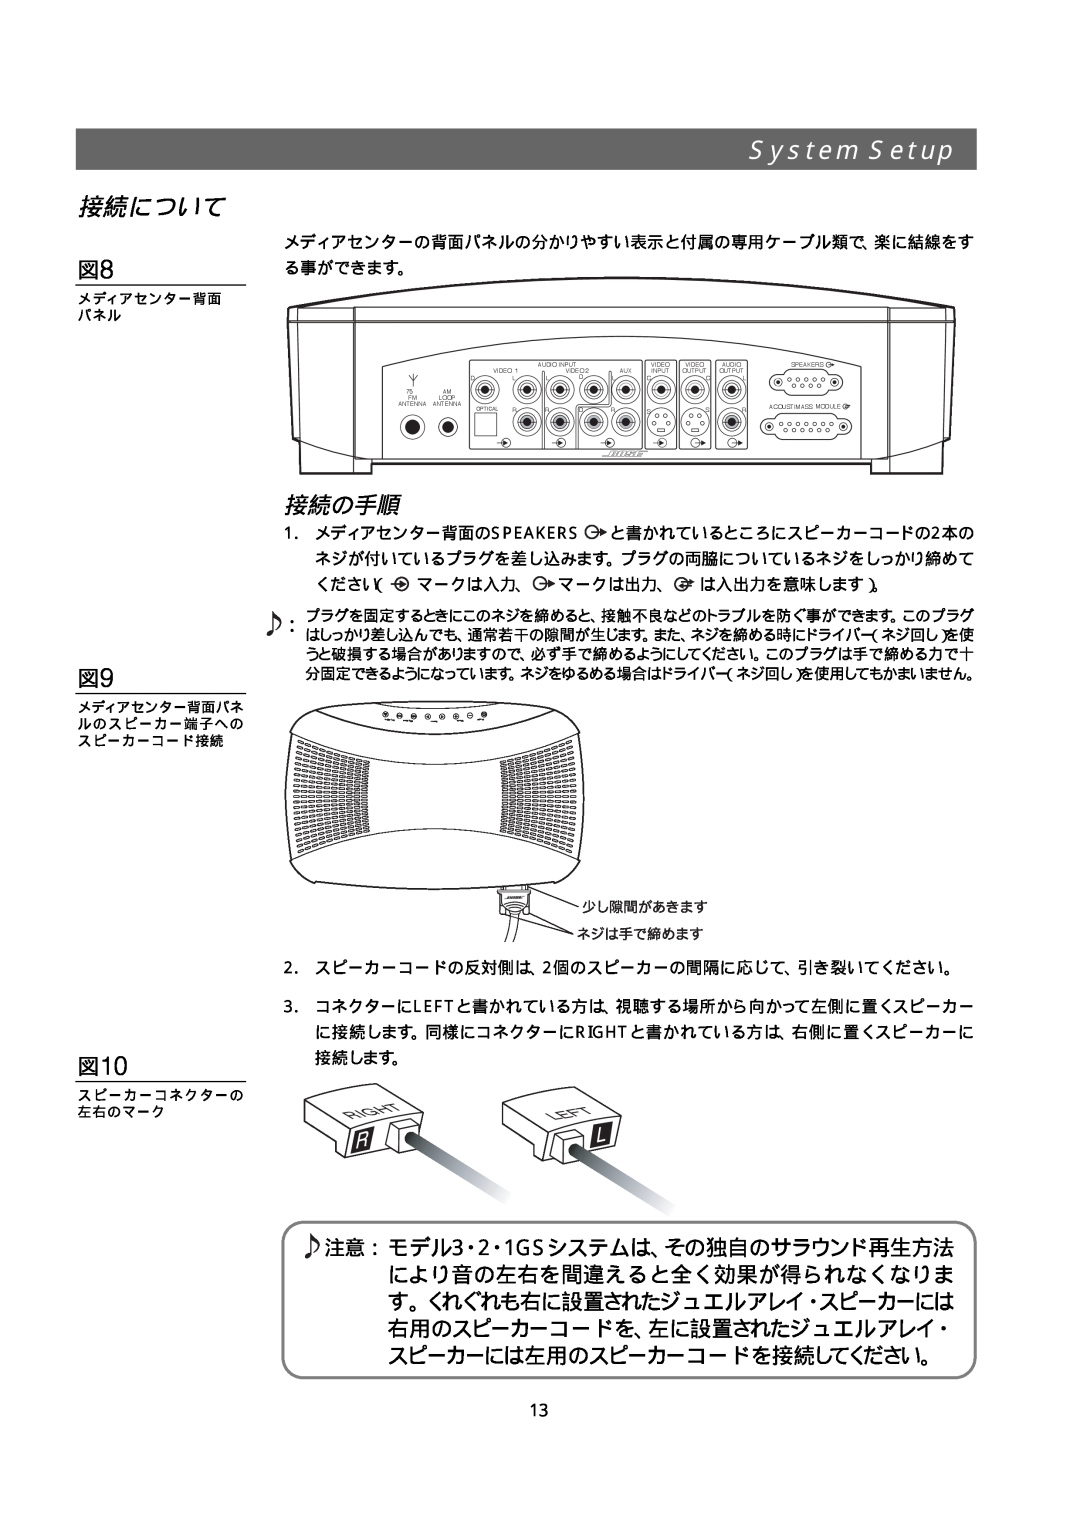 Bose 321GS owner manual 接続について, 接続の手順, System Setup 